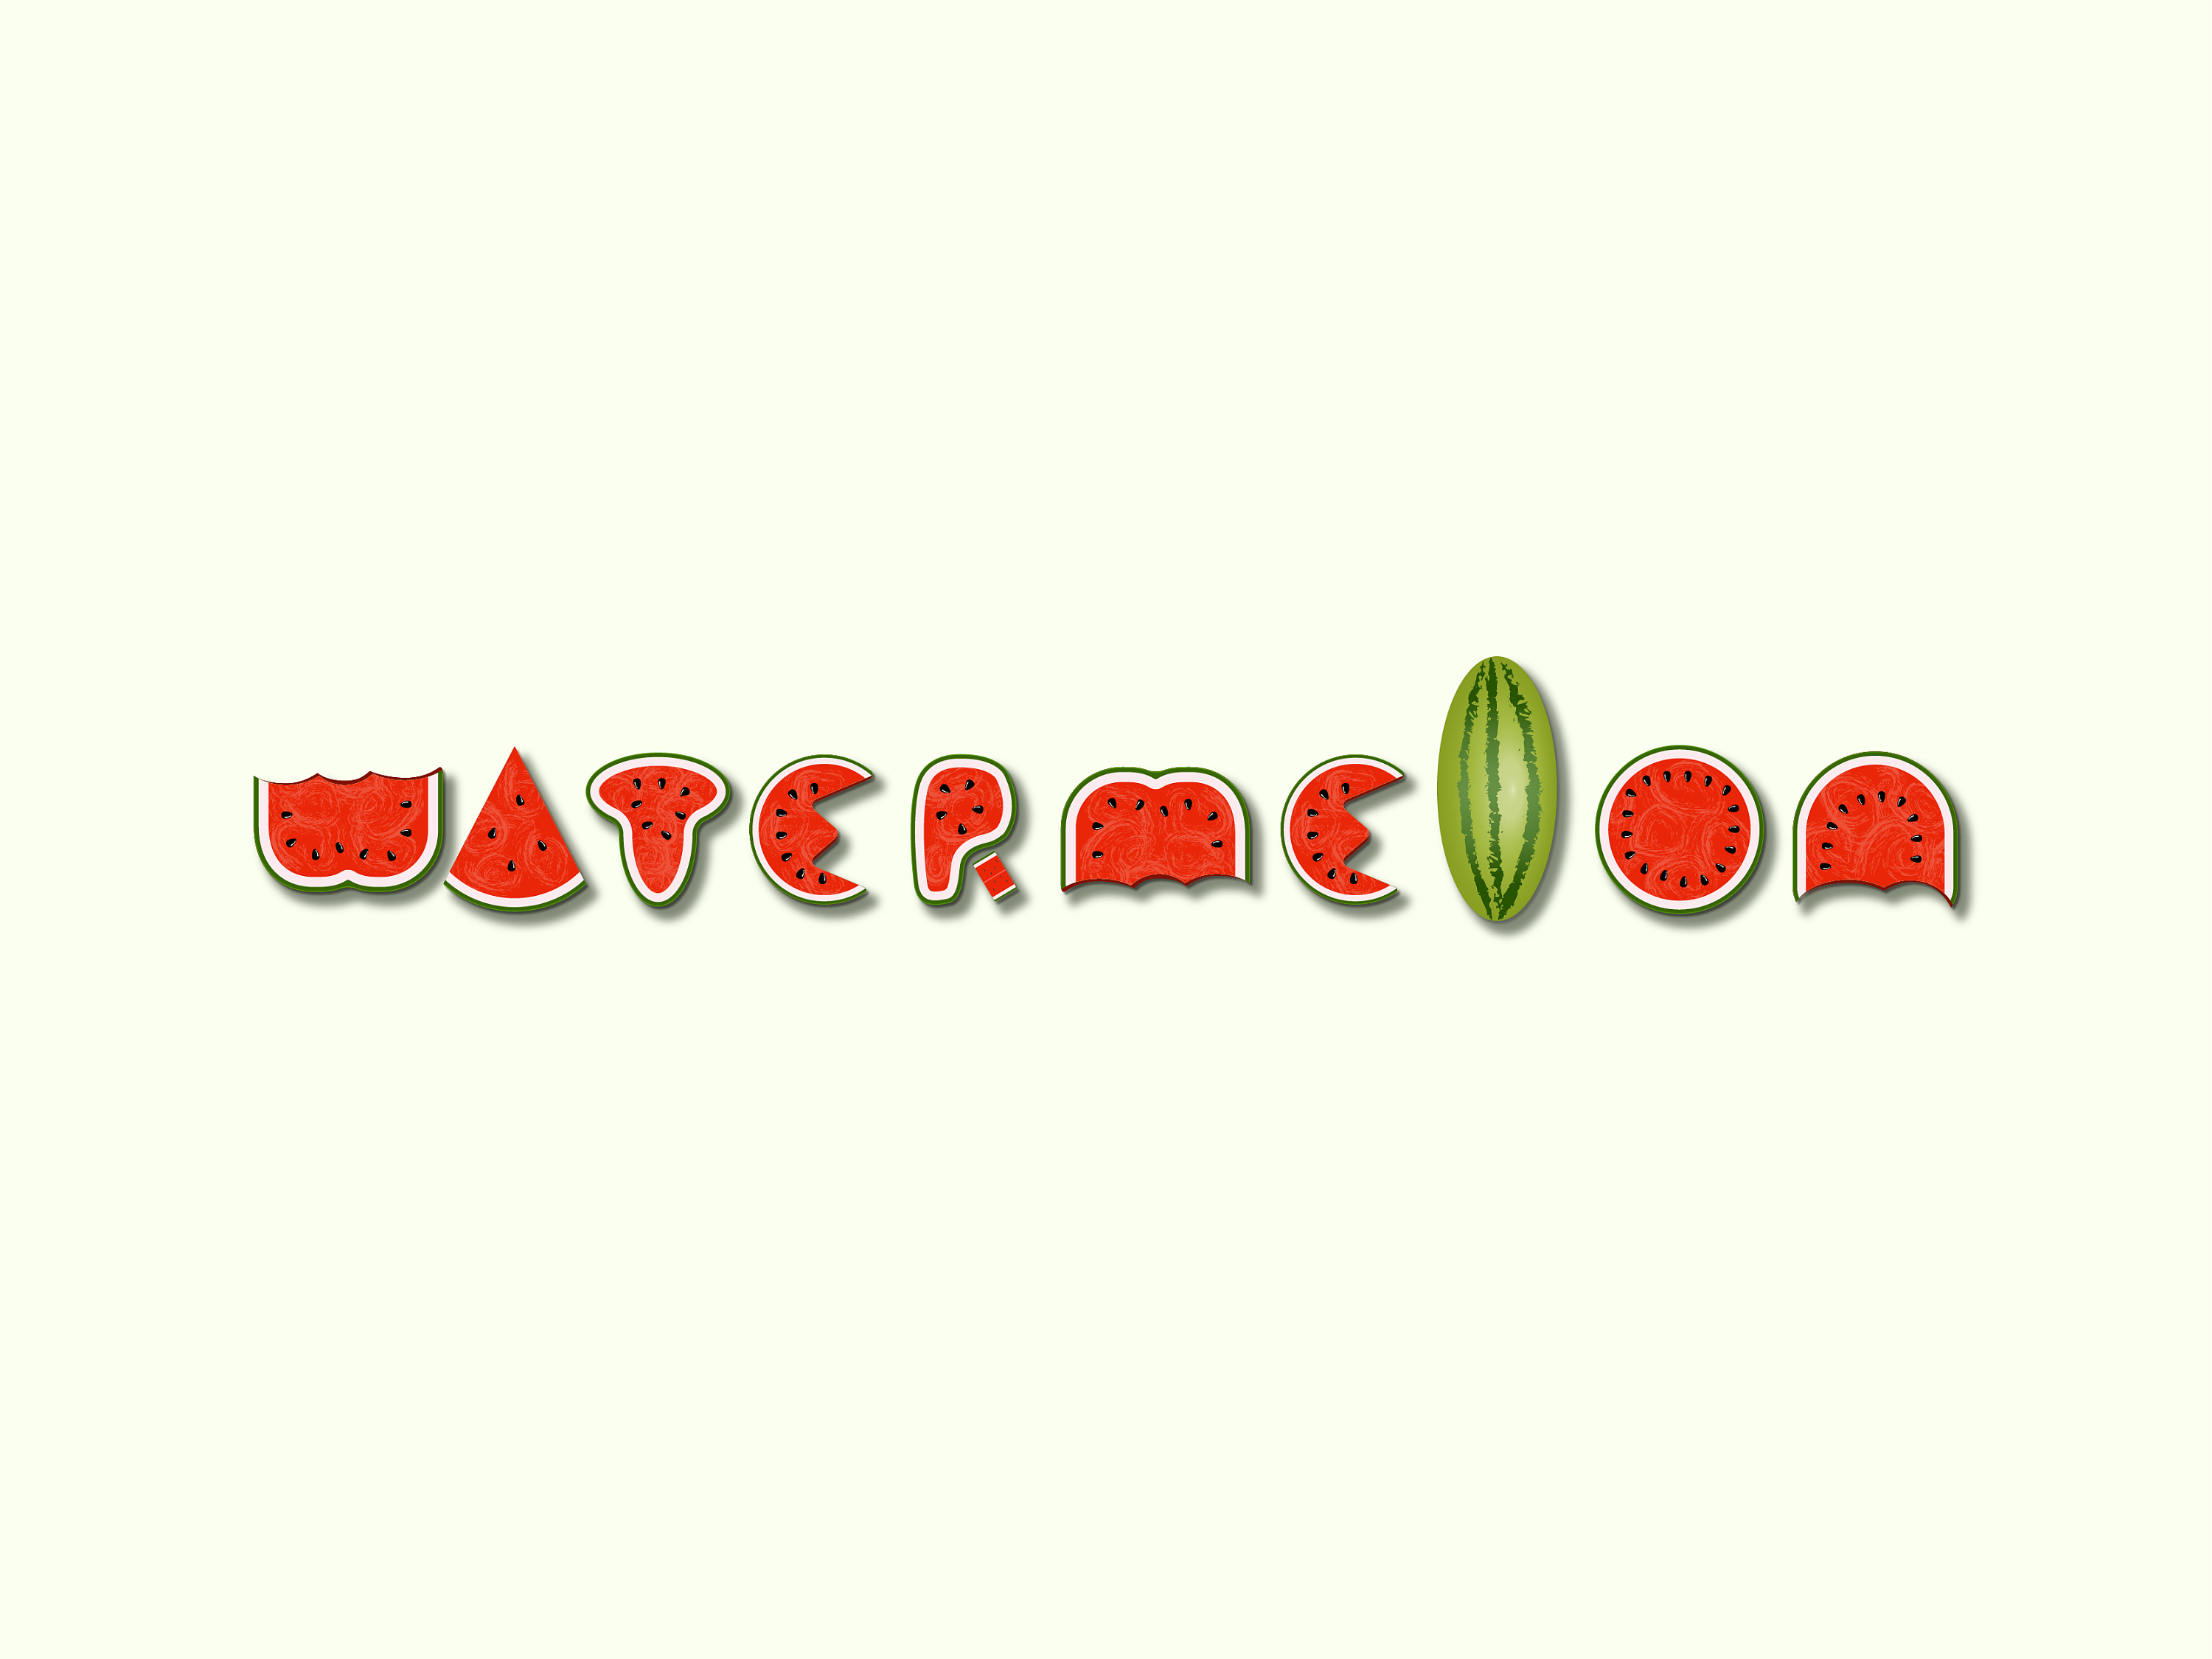 watermelon艺术字图片